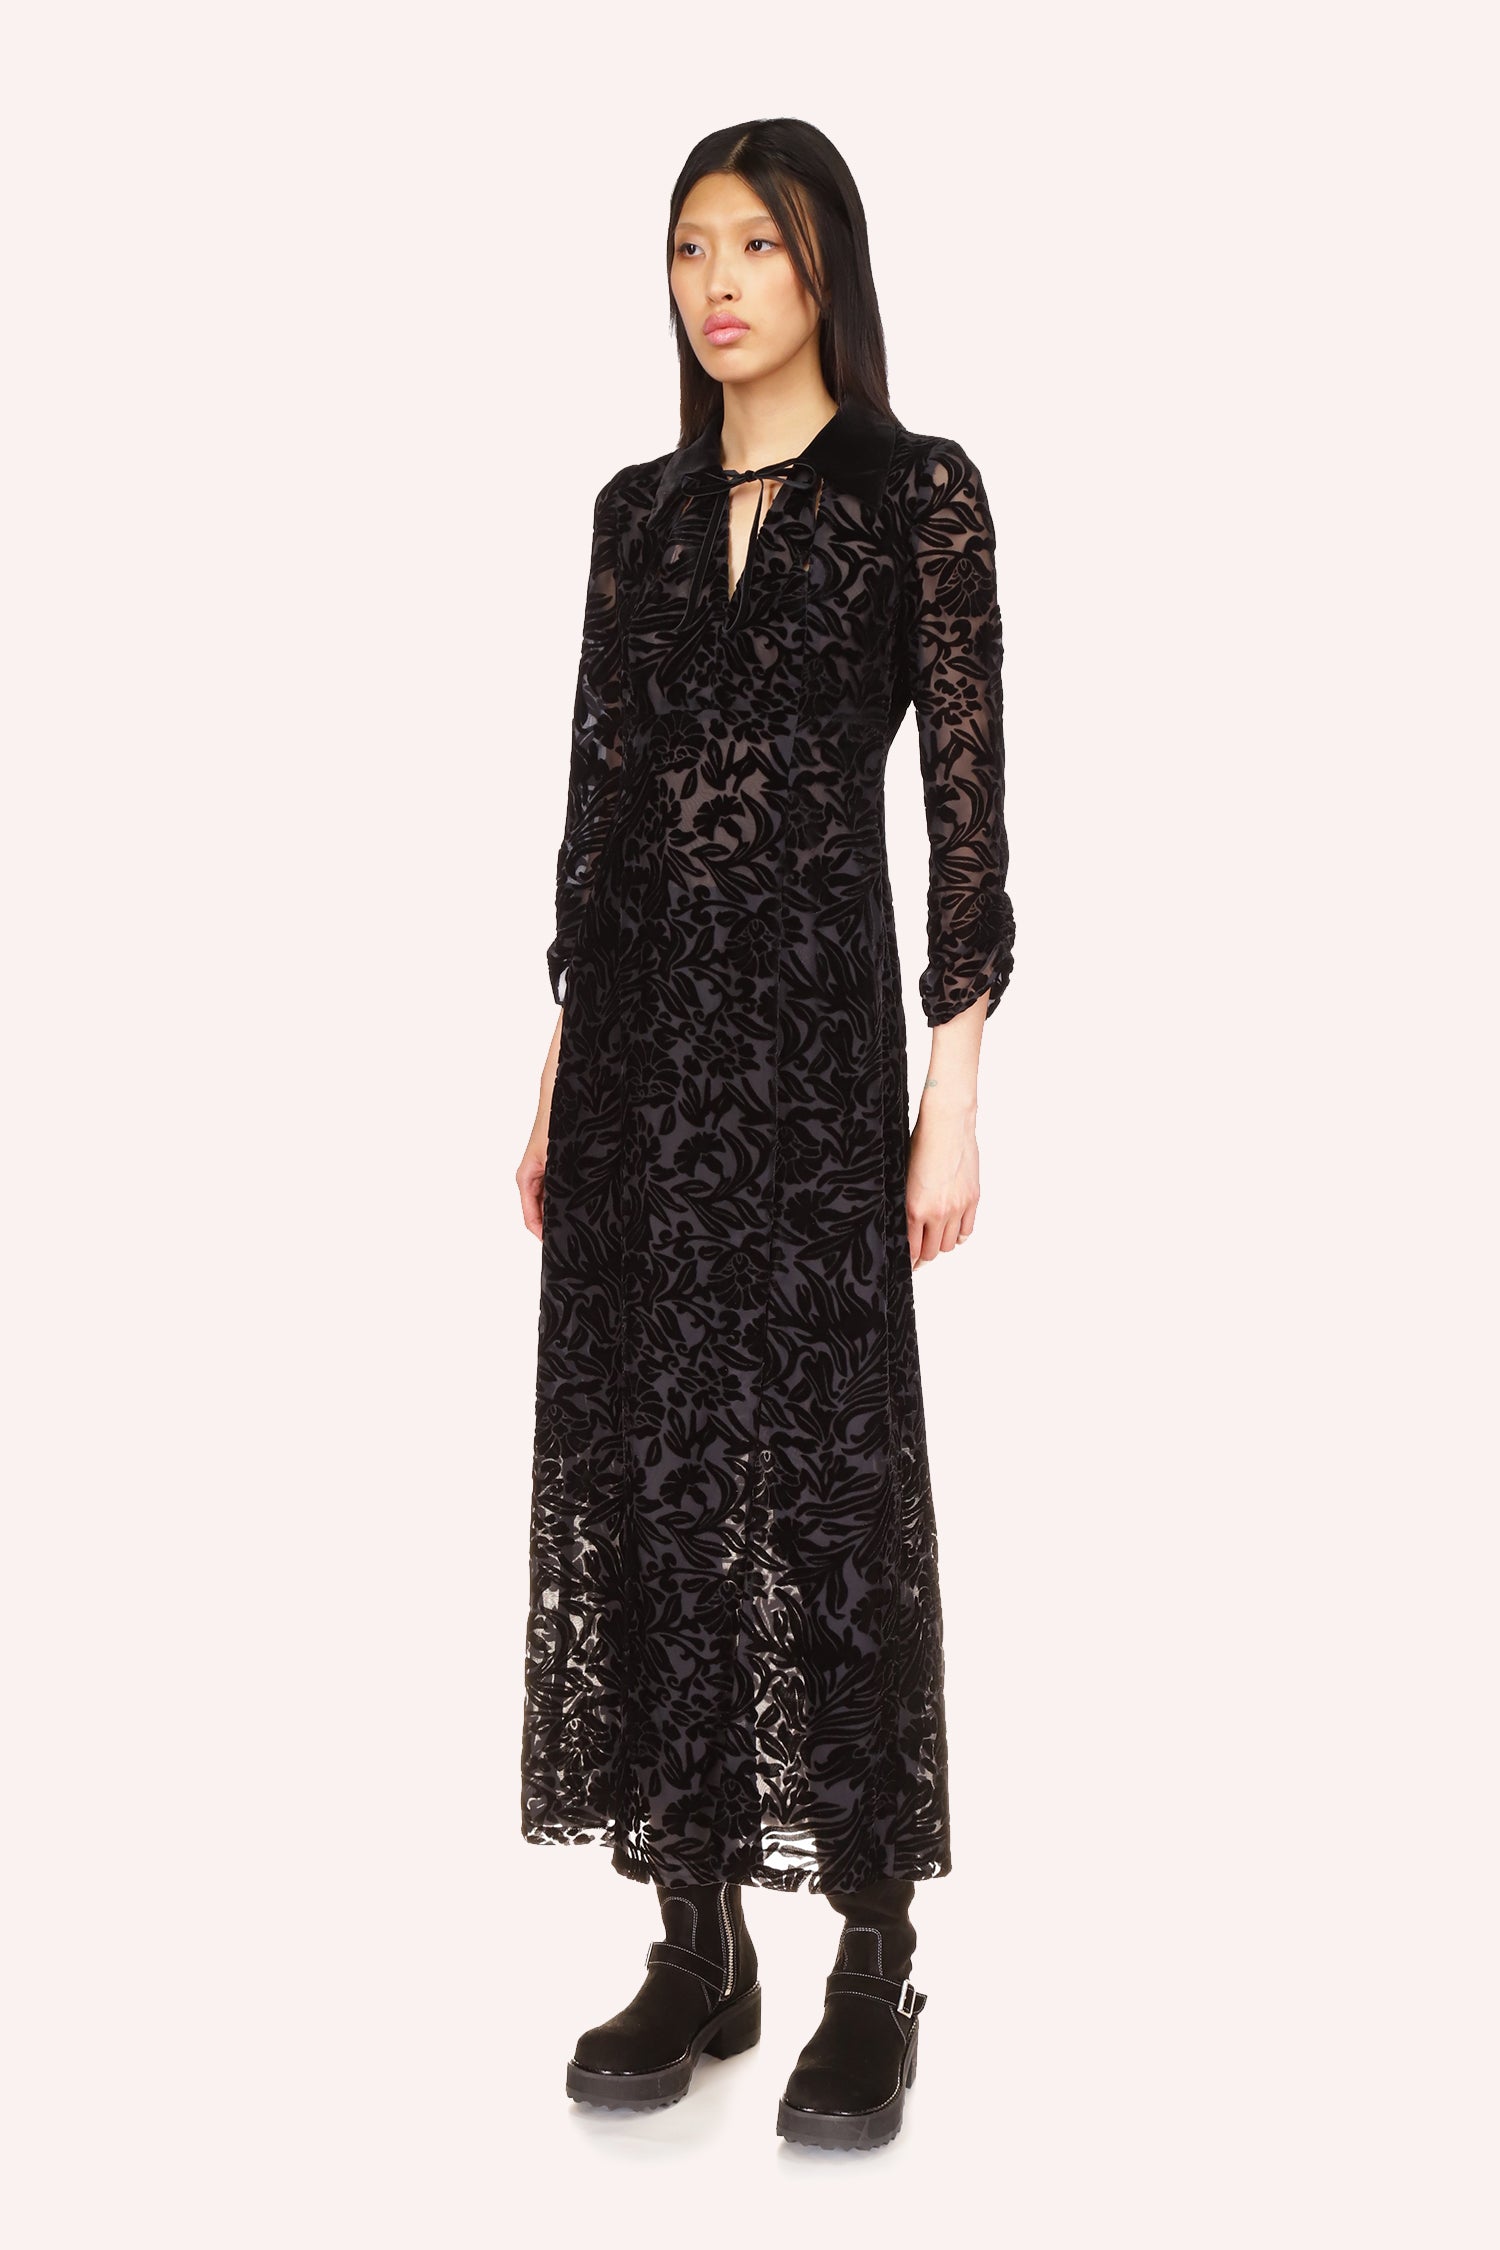 Velvet Burnout Dress  Black Multi from designerAnna Sui